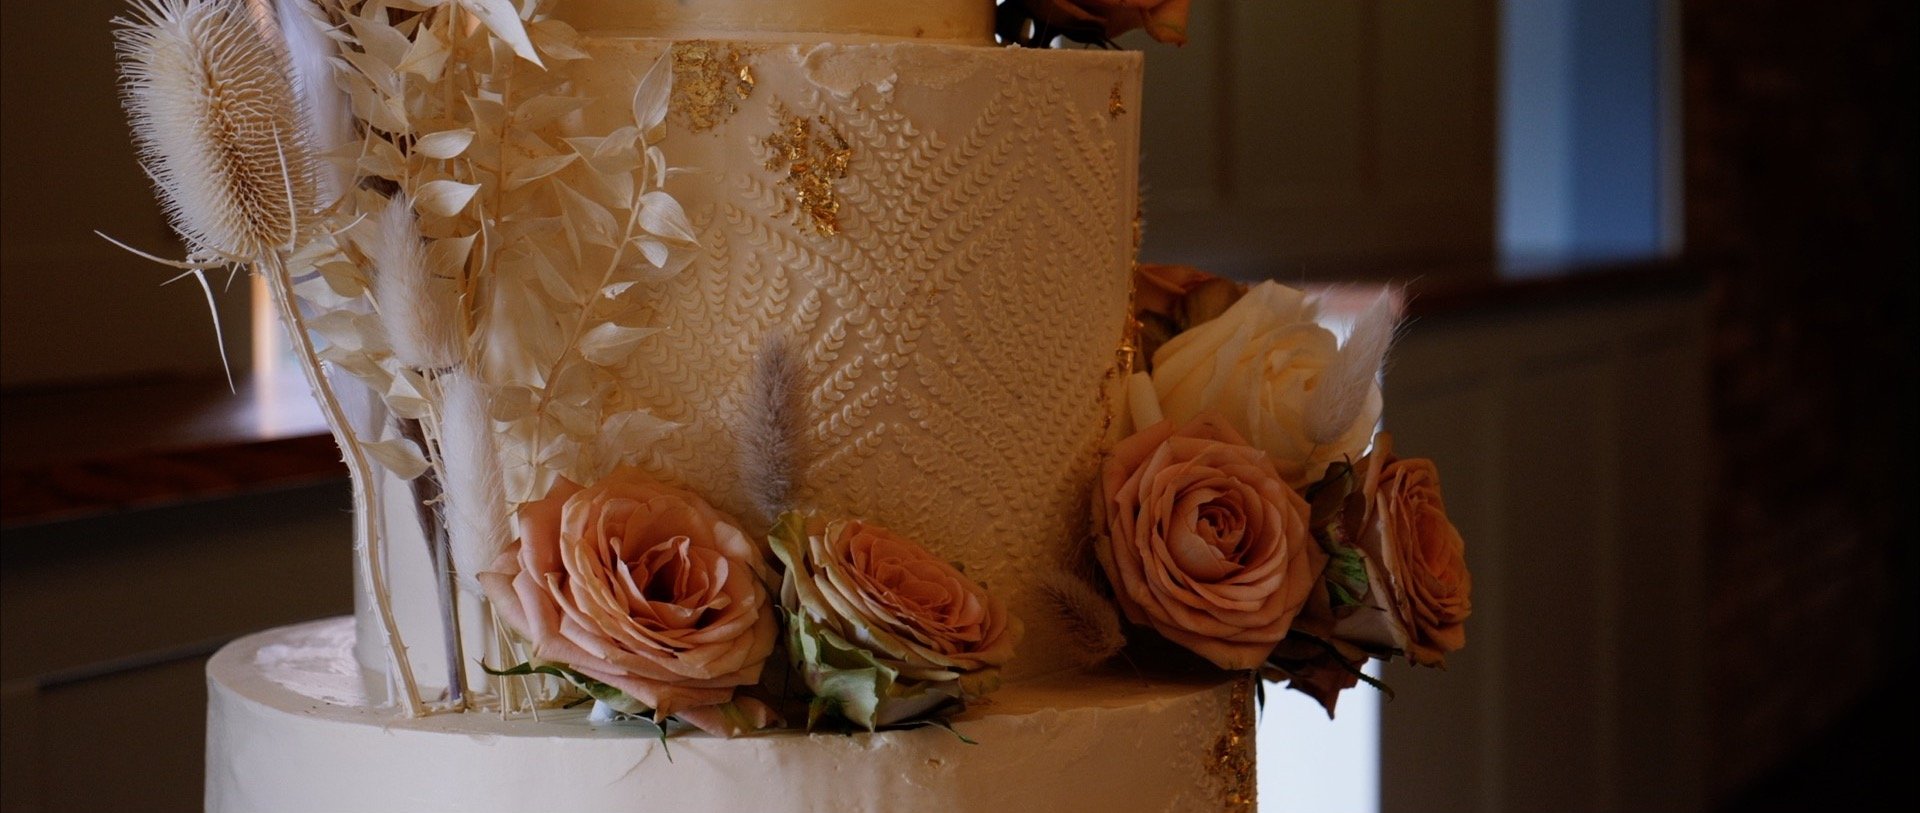 Apton Hall wedding cake video 3 Cheers Media.jpg